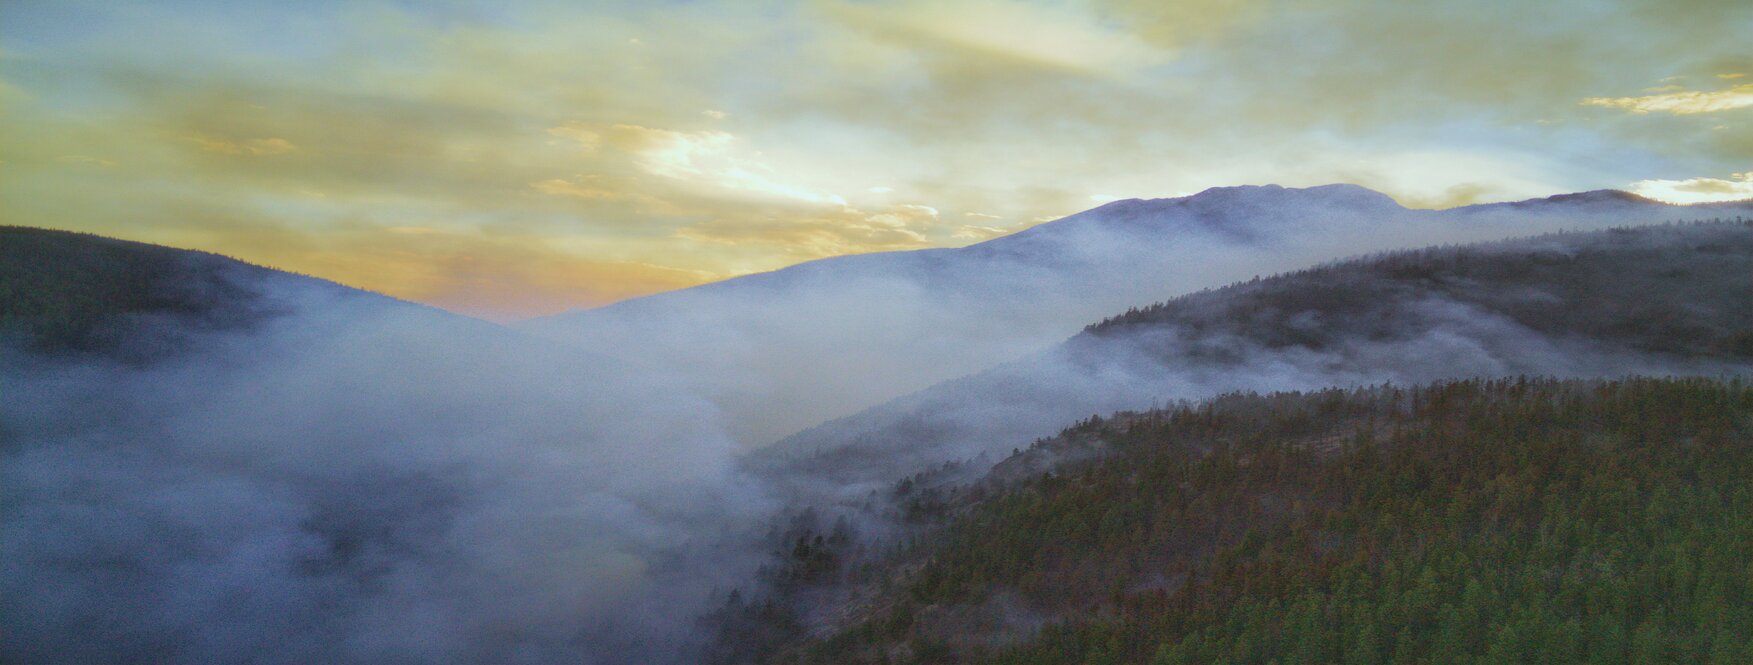 Misty mountains at sunrise